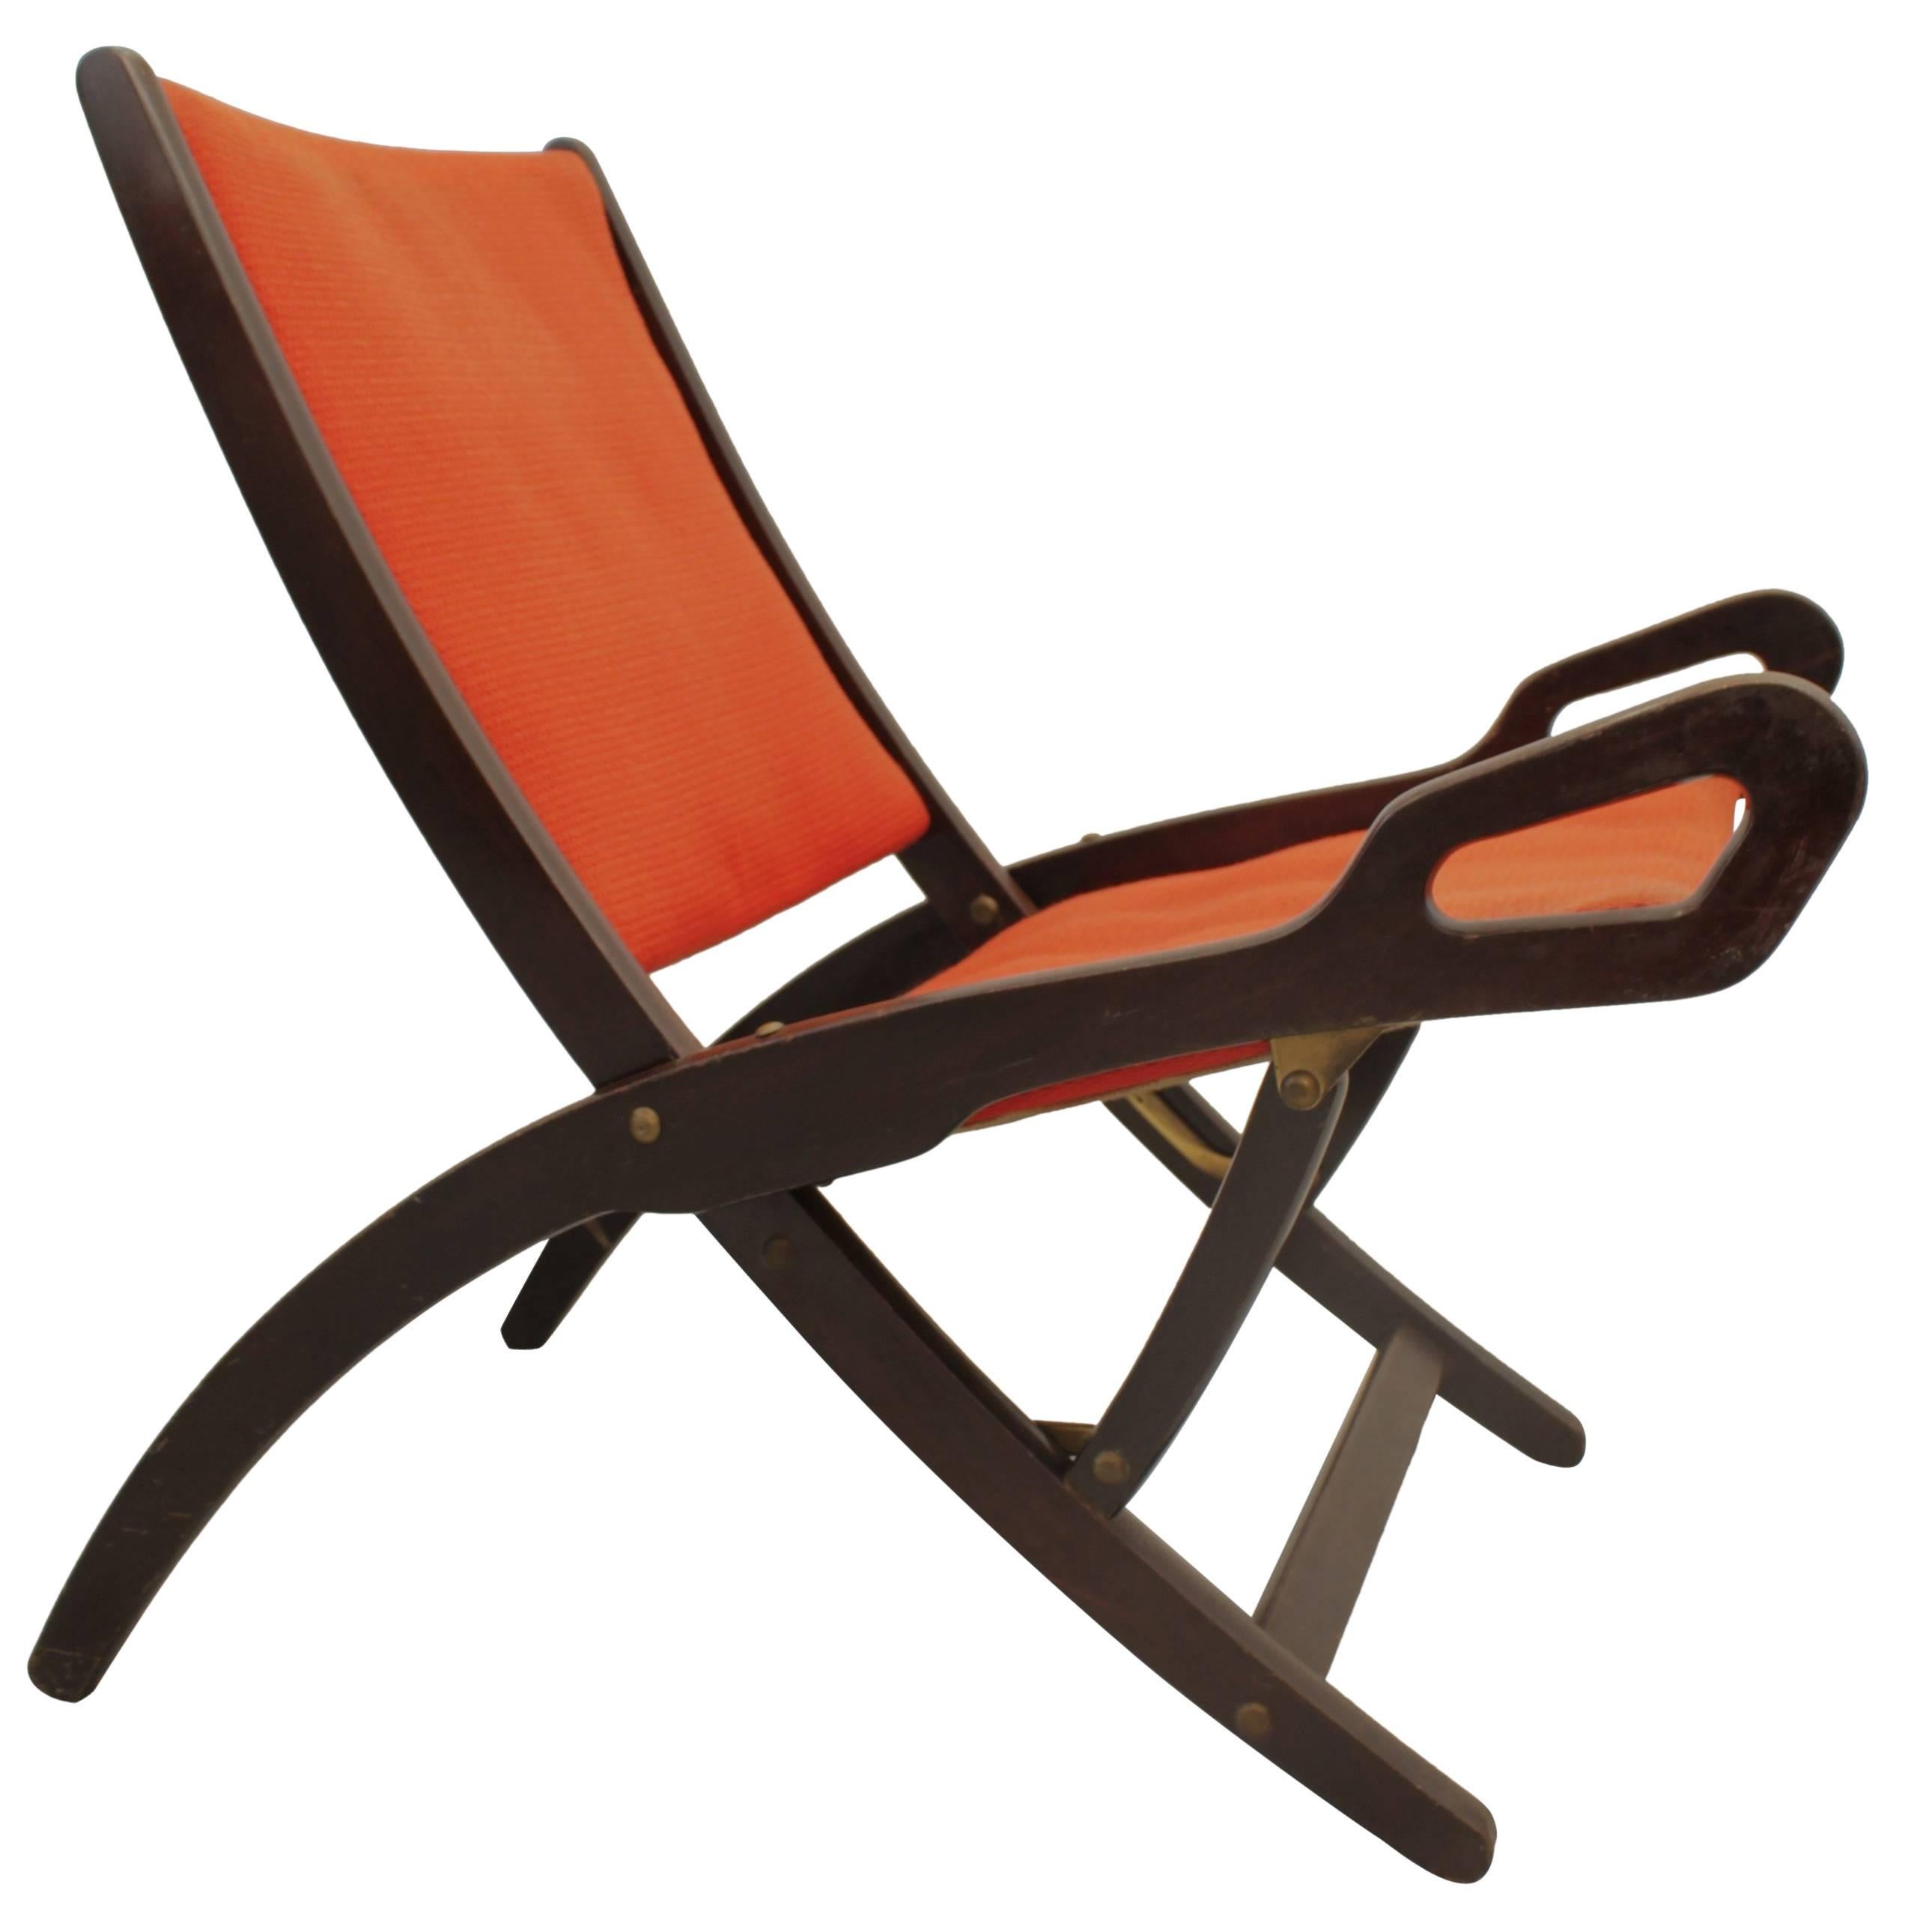 "Ninfea" Folding Chair by Gio Ponti